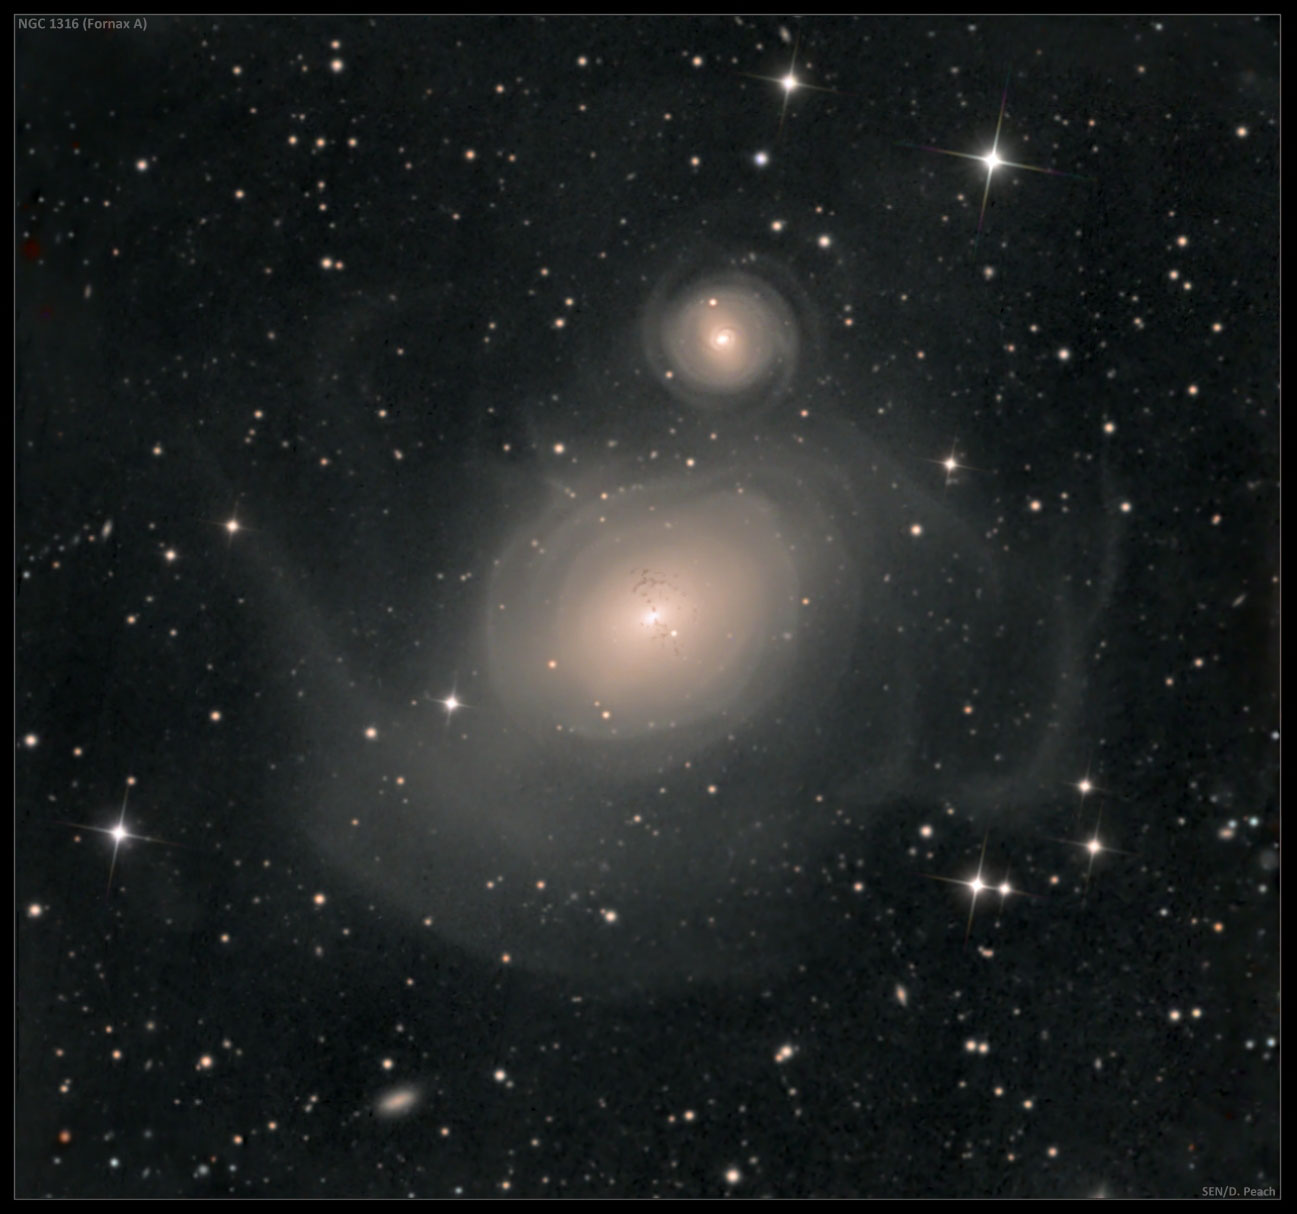 Image of Elongated, football-like shaped elliptical galaxy.